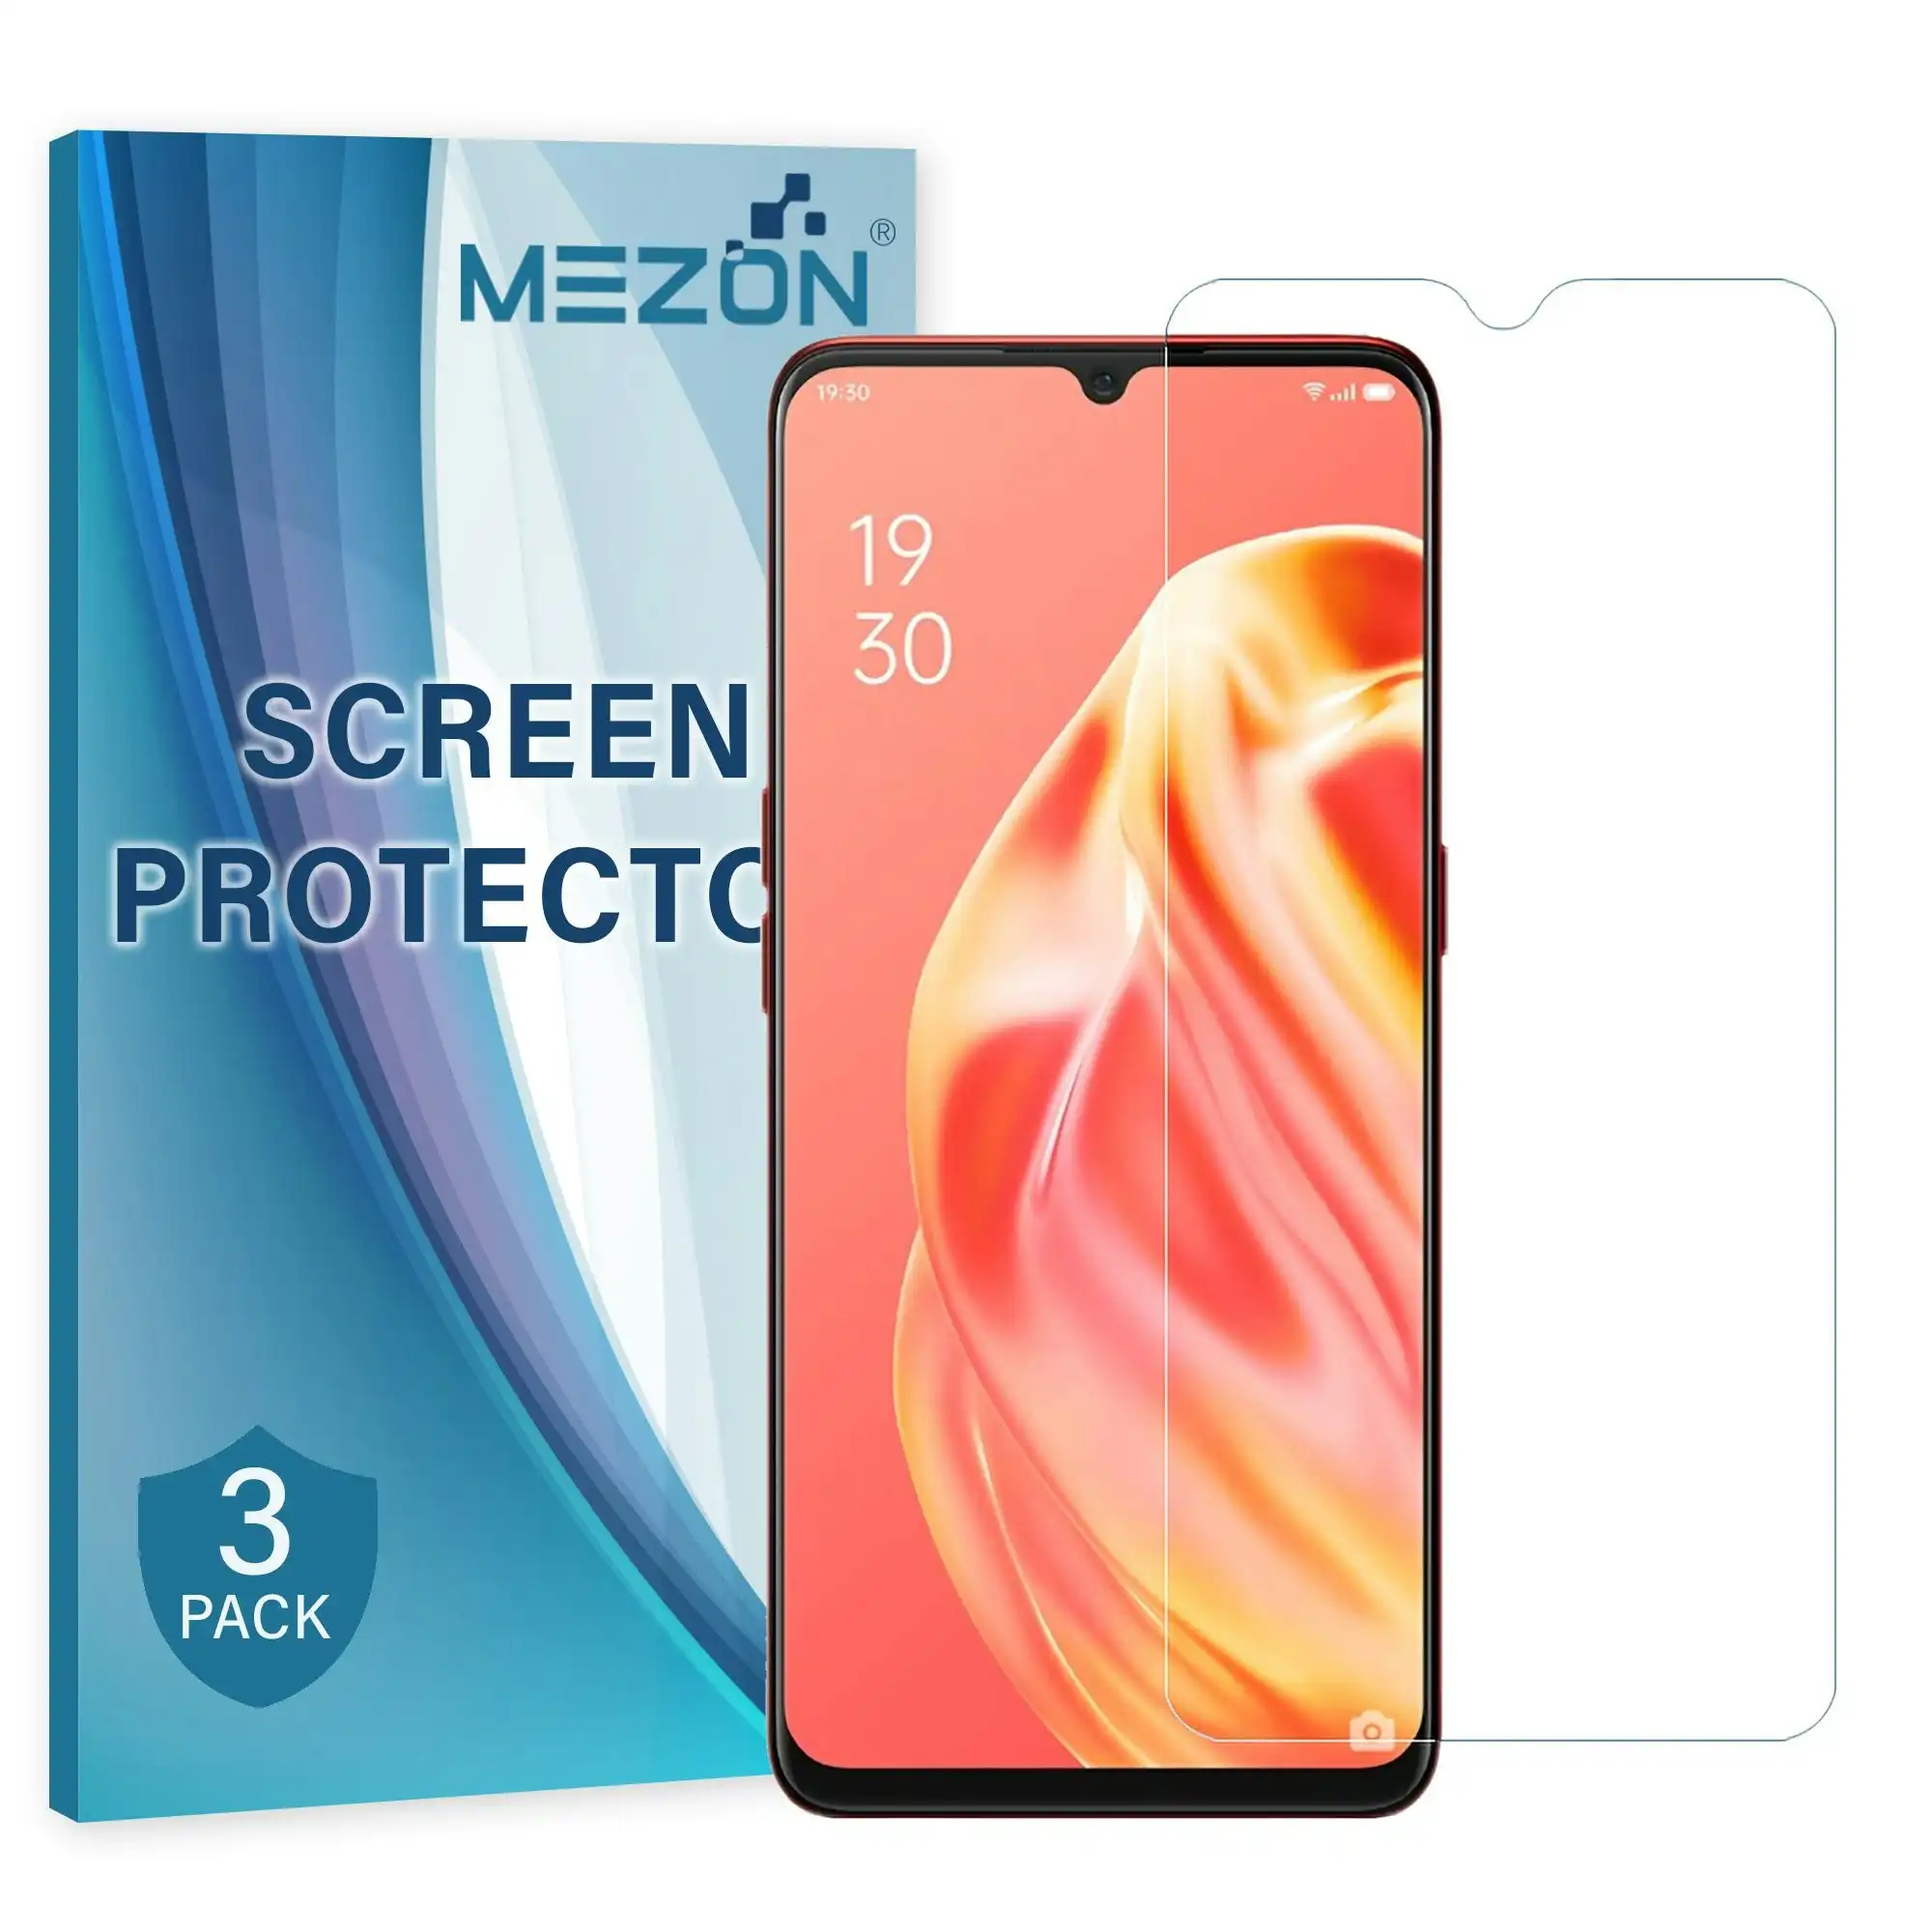 [3 Pack] MEZON Vivo X50 Lite Ultra Clear Screen Protector Case Friendly Film (Vivo X50 Lite, Clear)